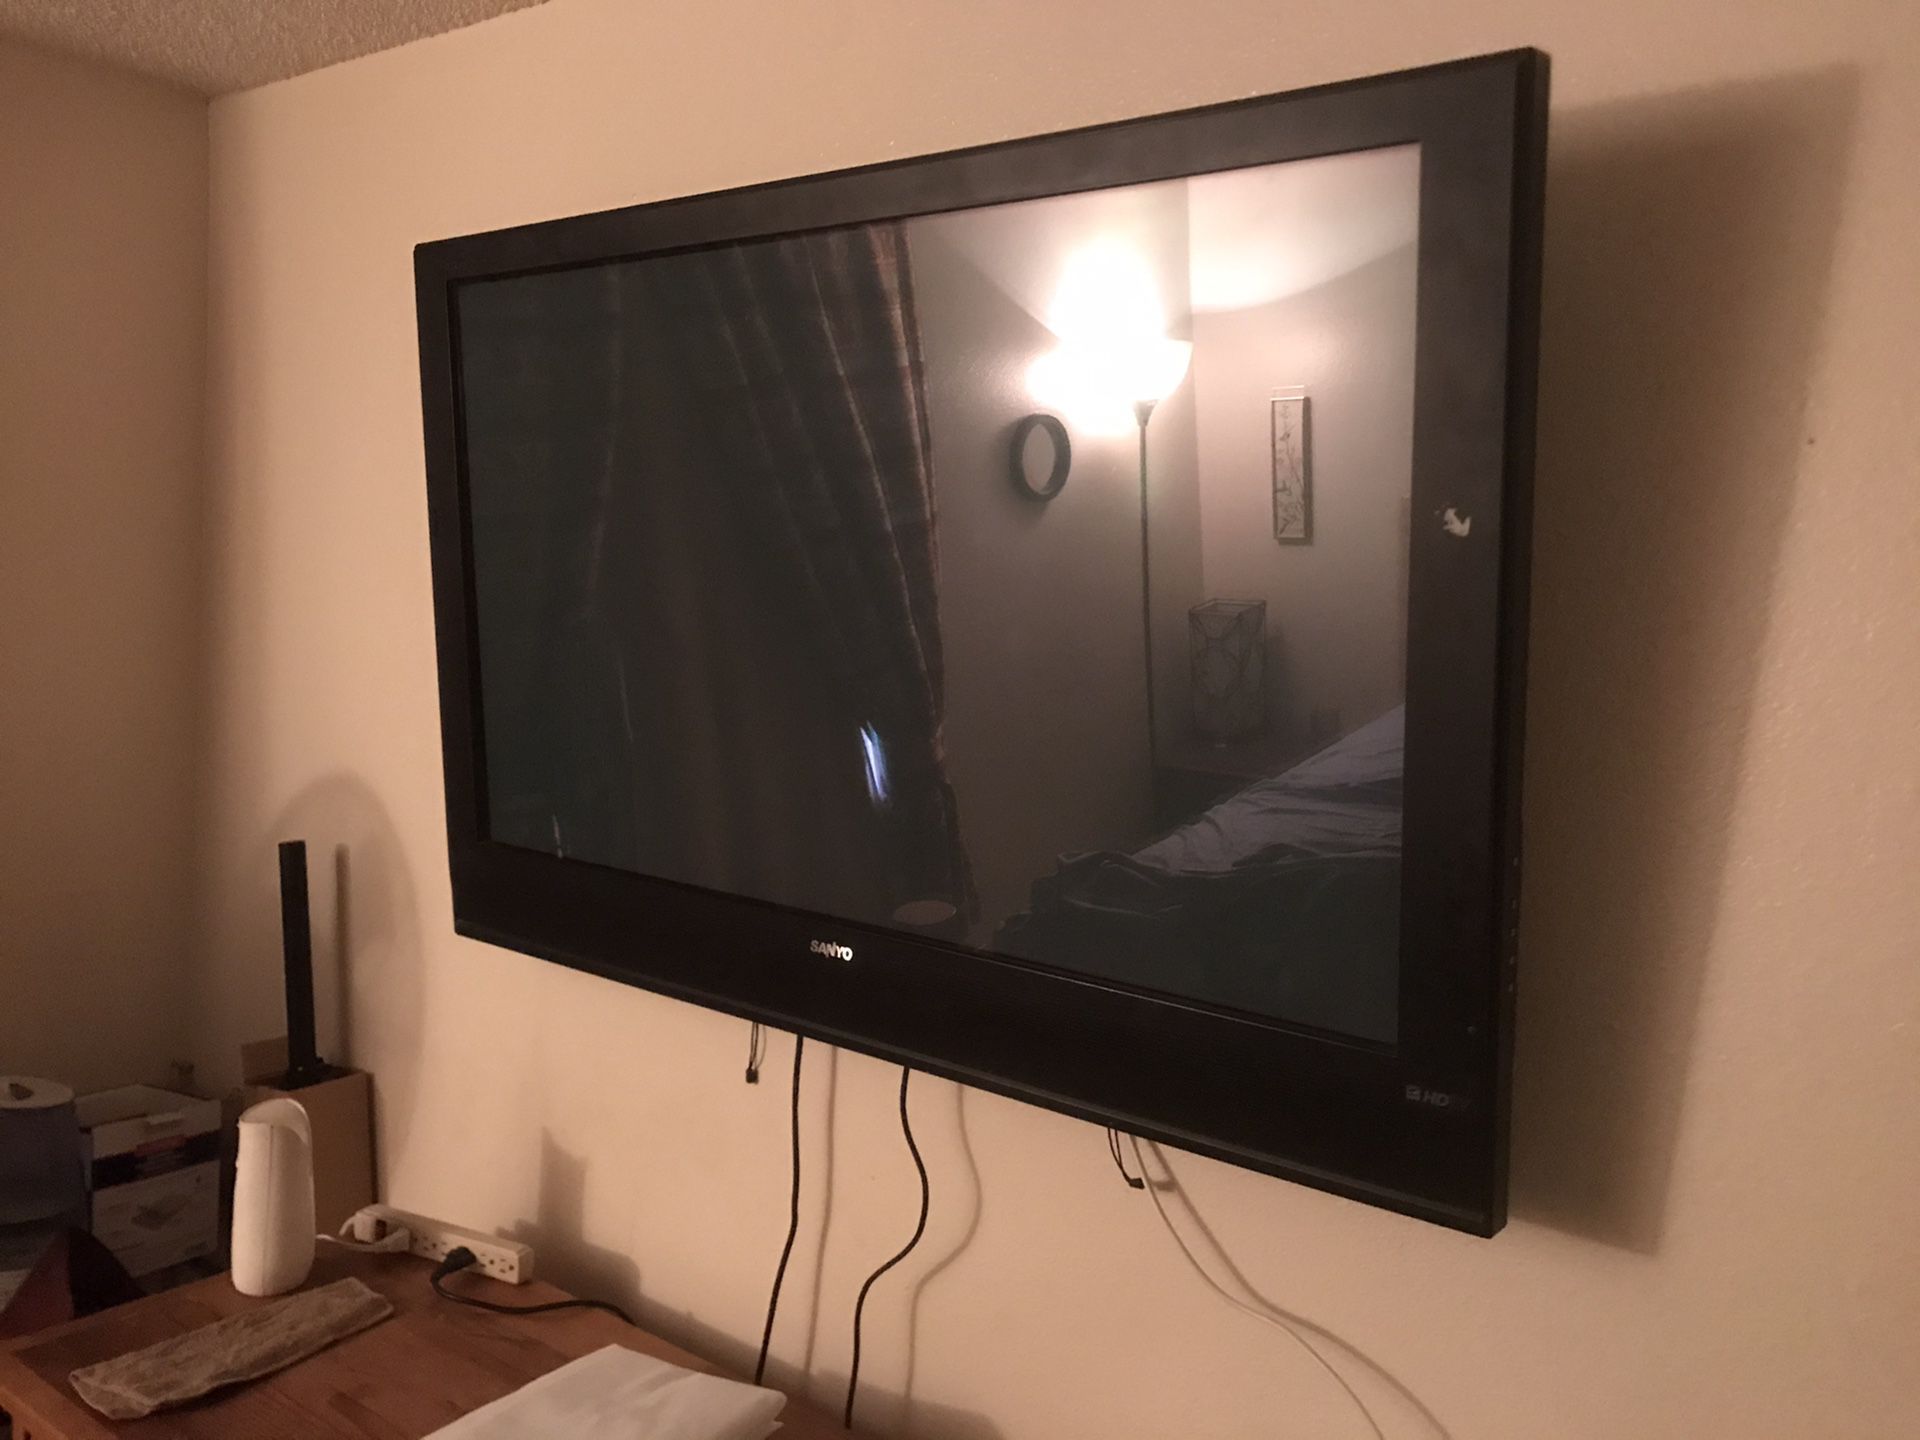 Flatscreen 60 inch TV works great